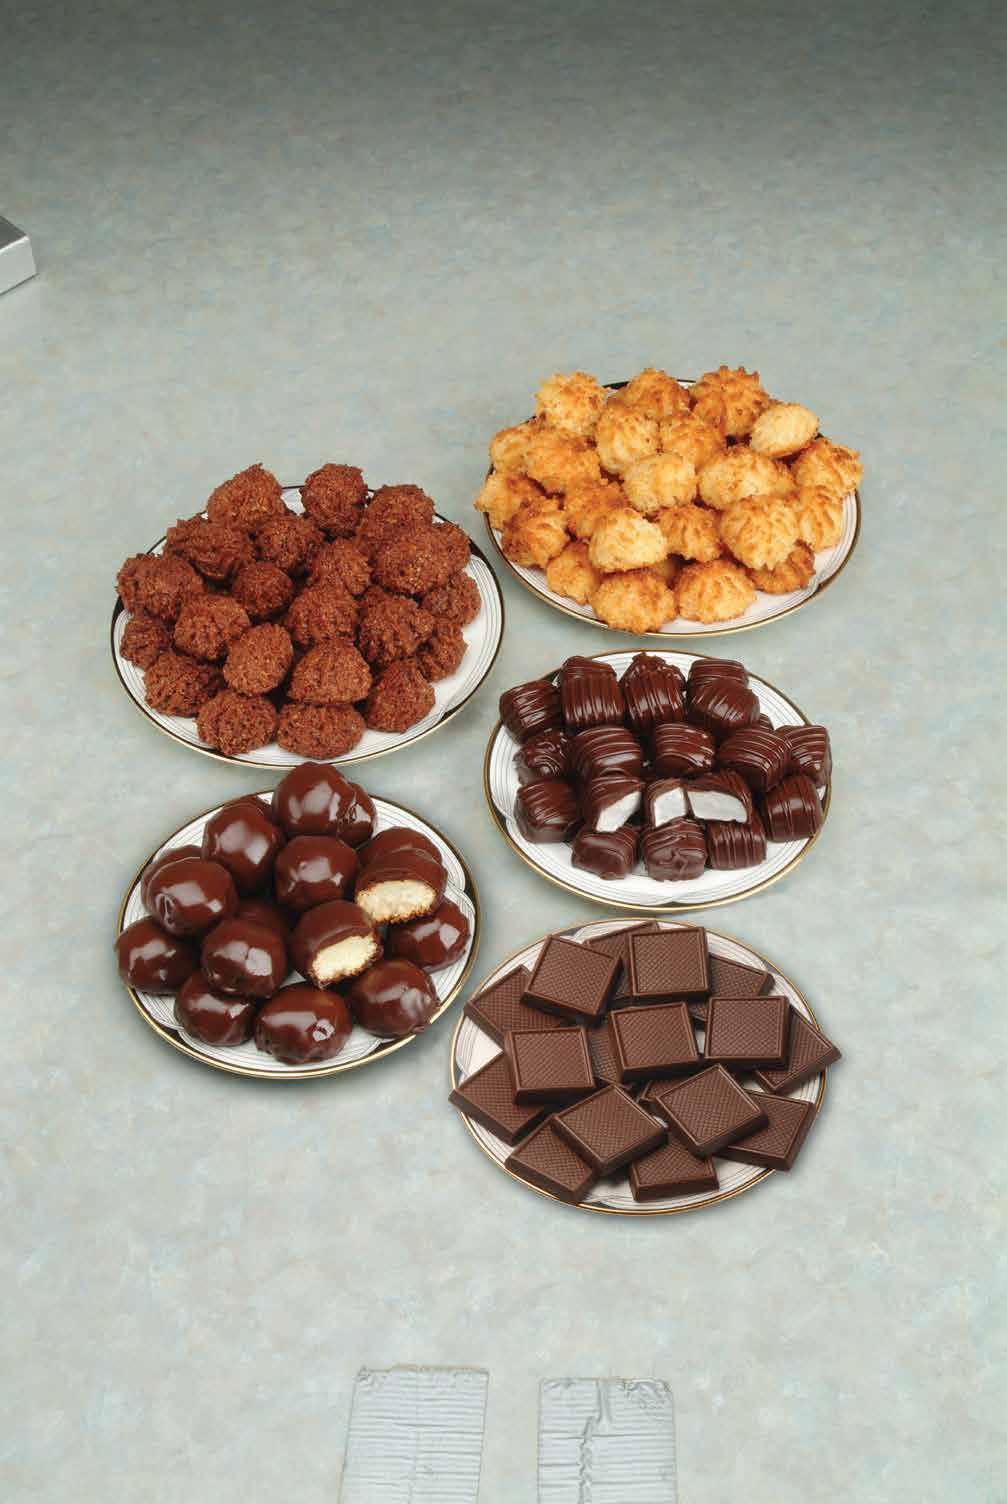 00 492 Chocolate Macaroons Macarrones de chocolate Enjoy